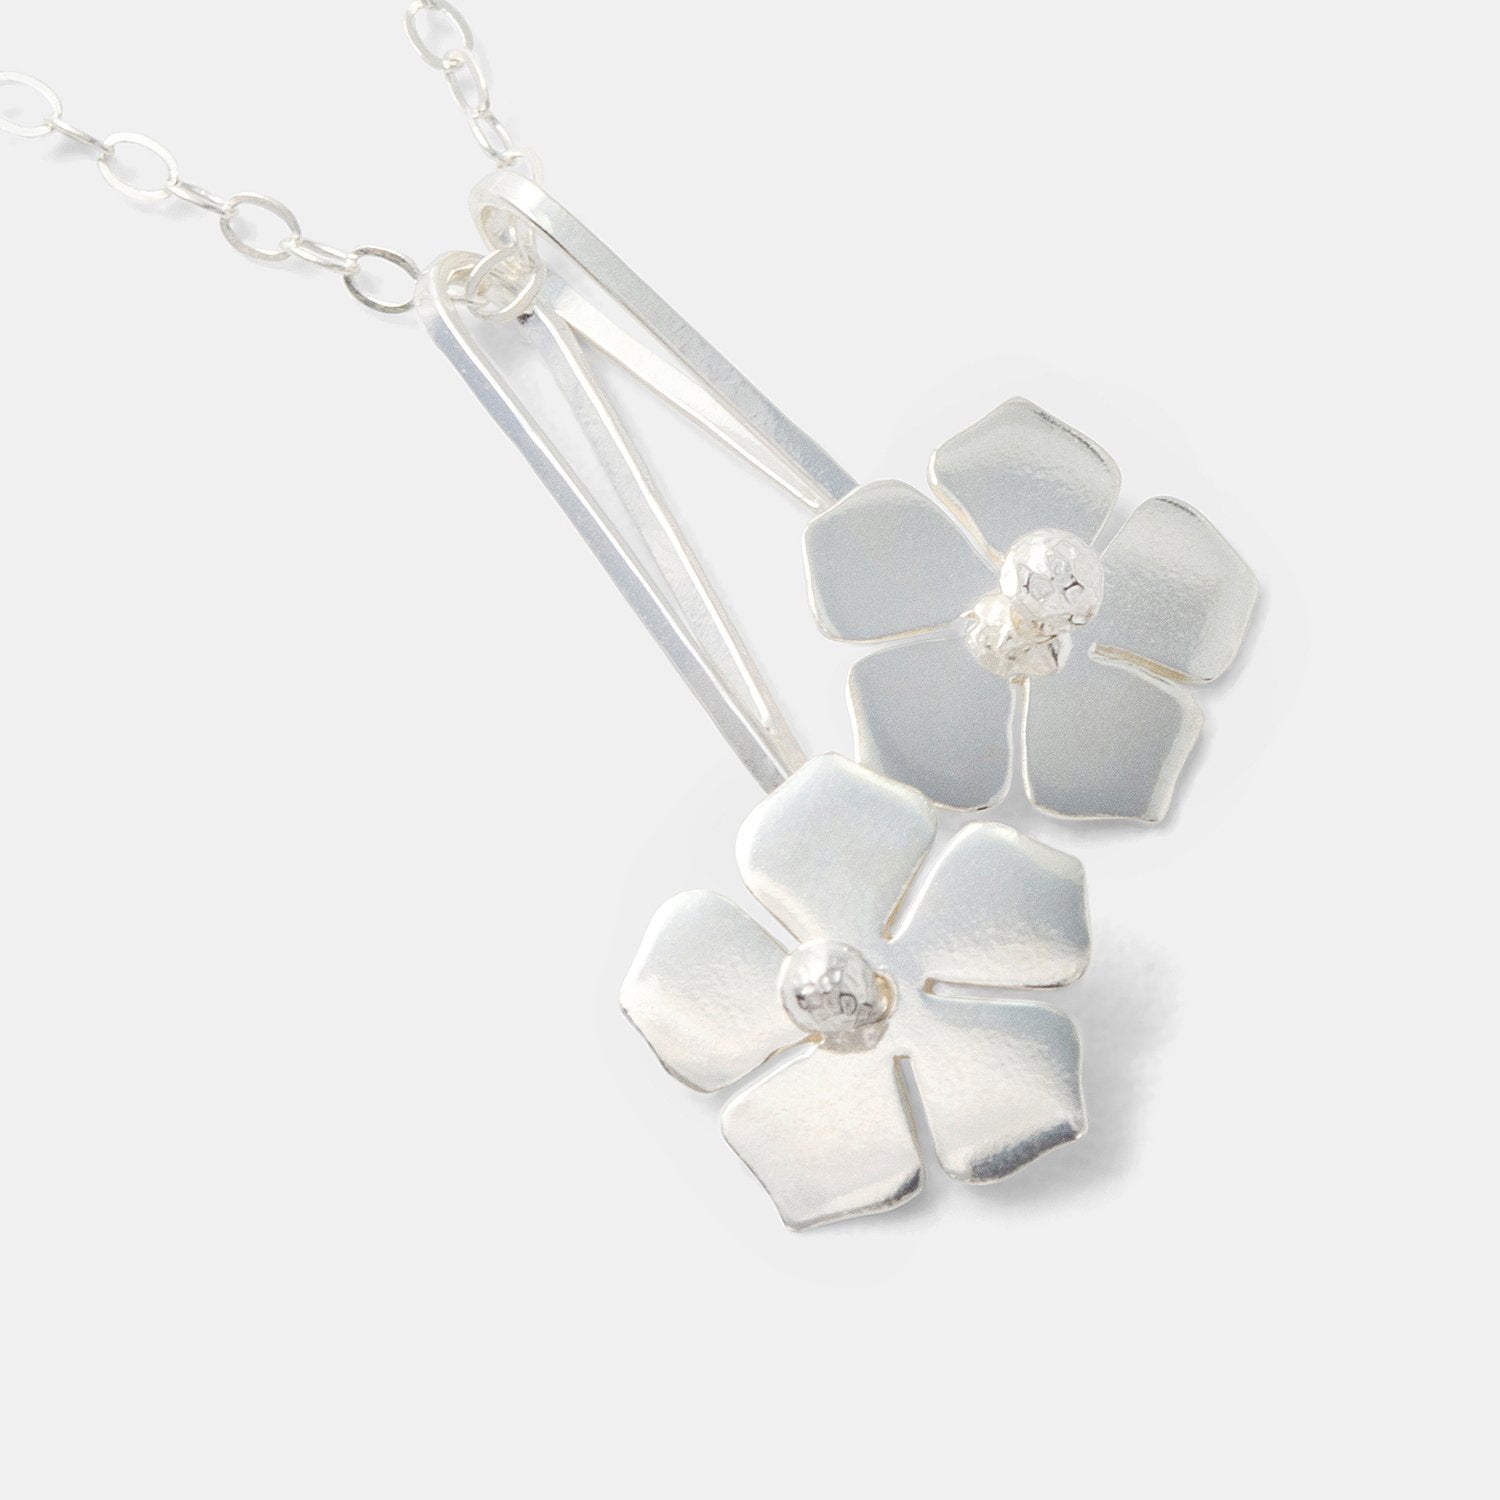 Forget-me-nots on chain - Simone Walsh Jewellery Australia